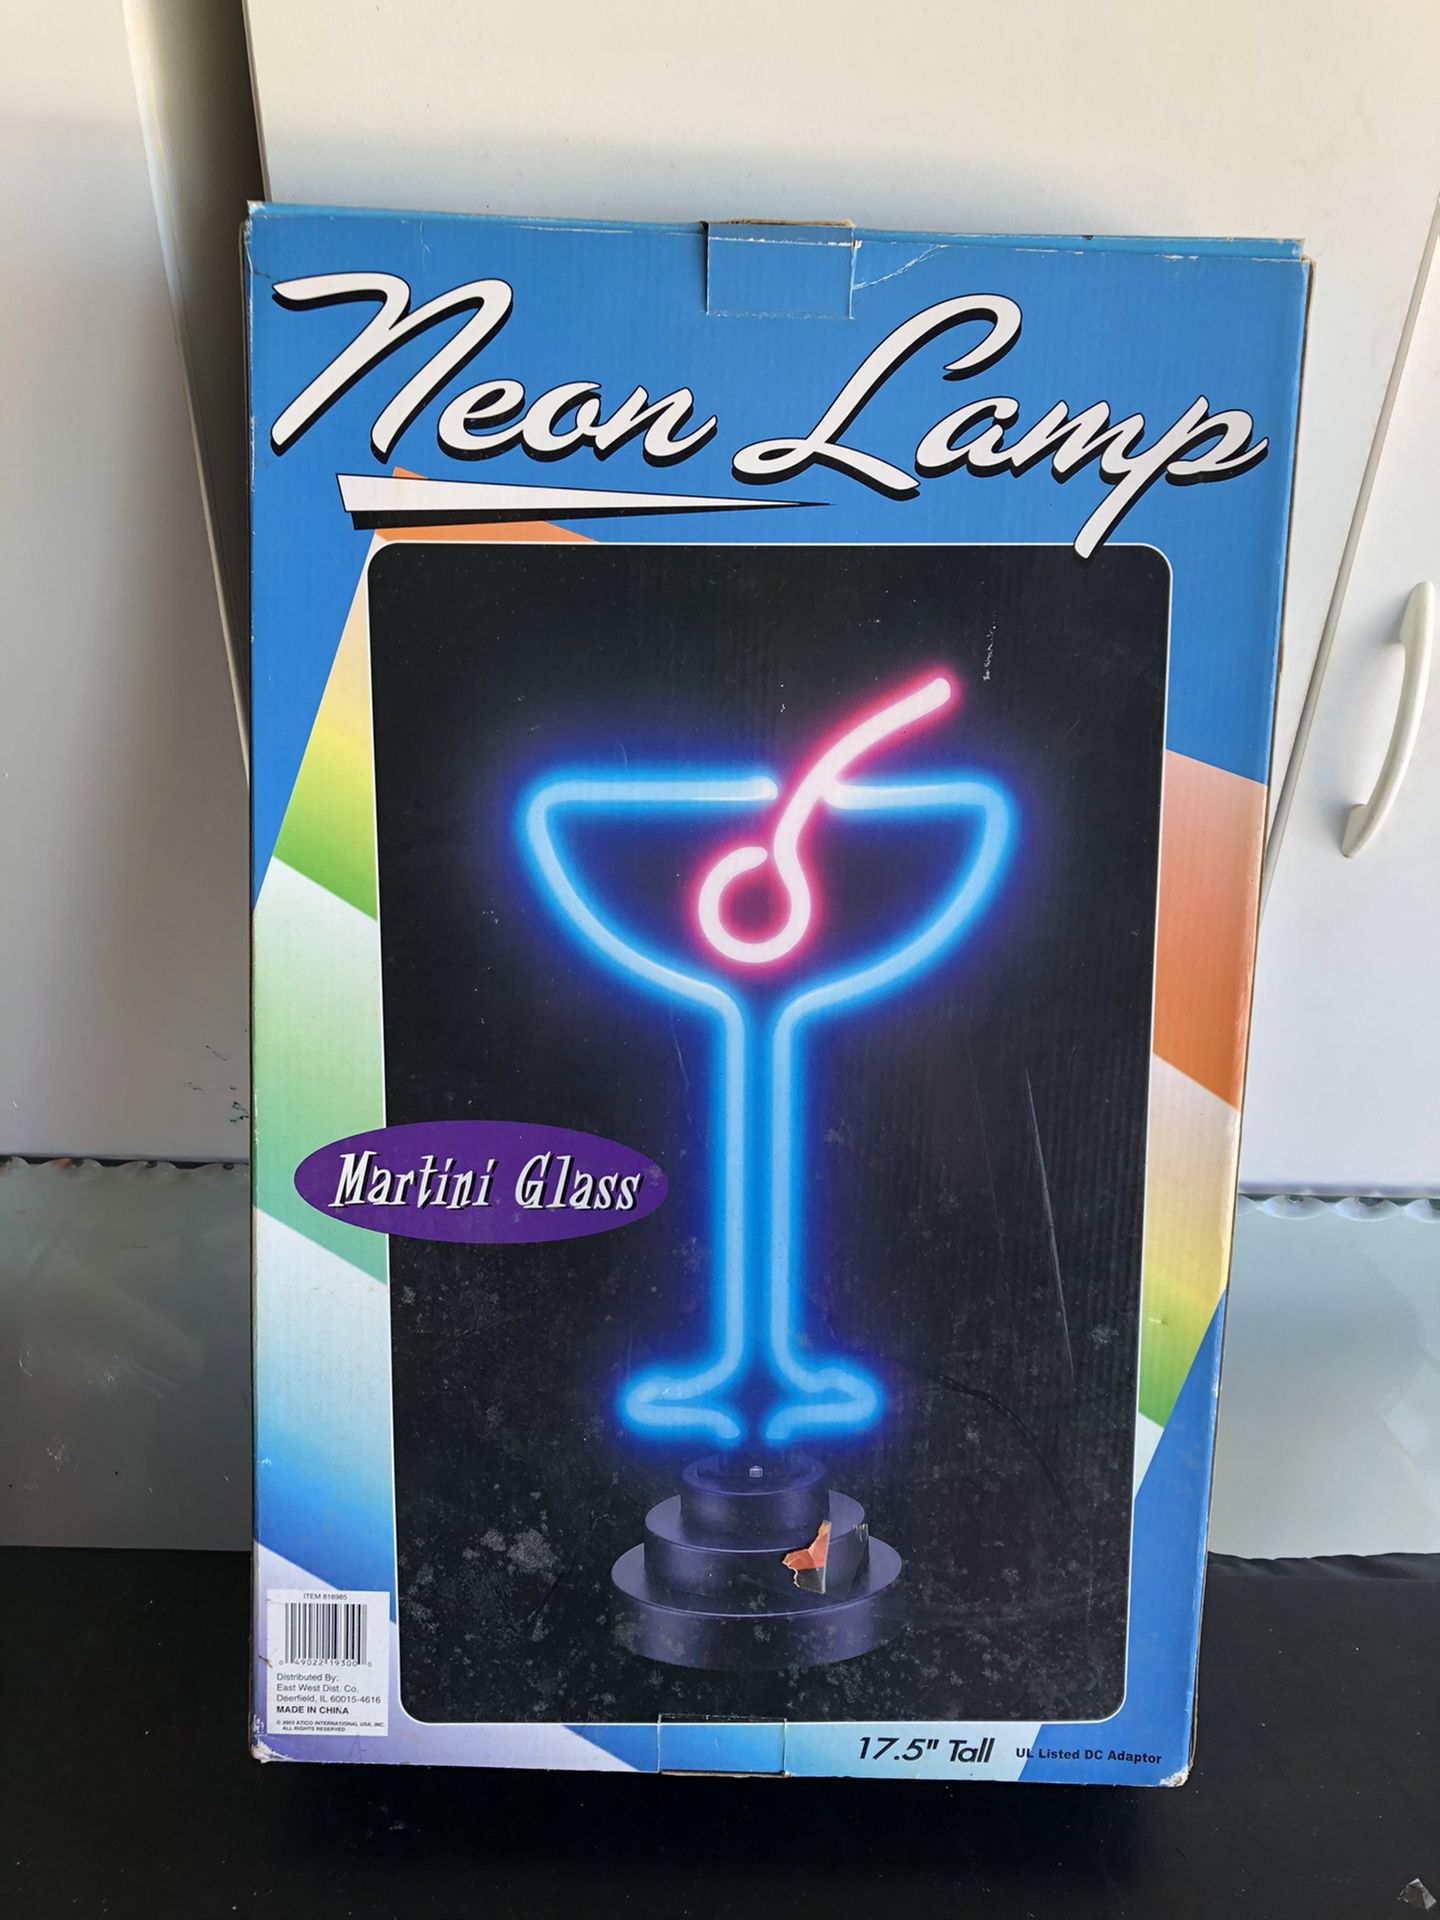 Neon lamp